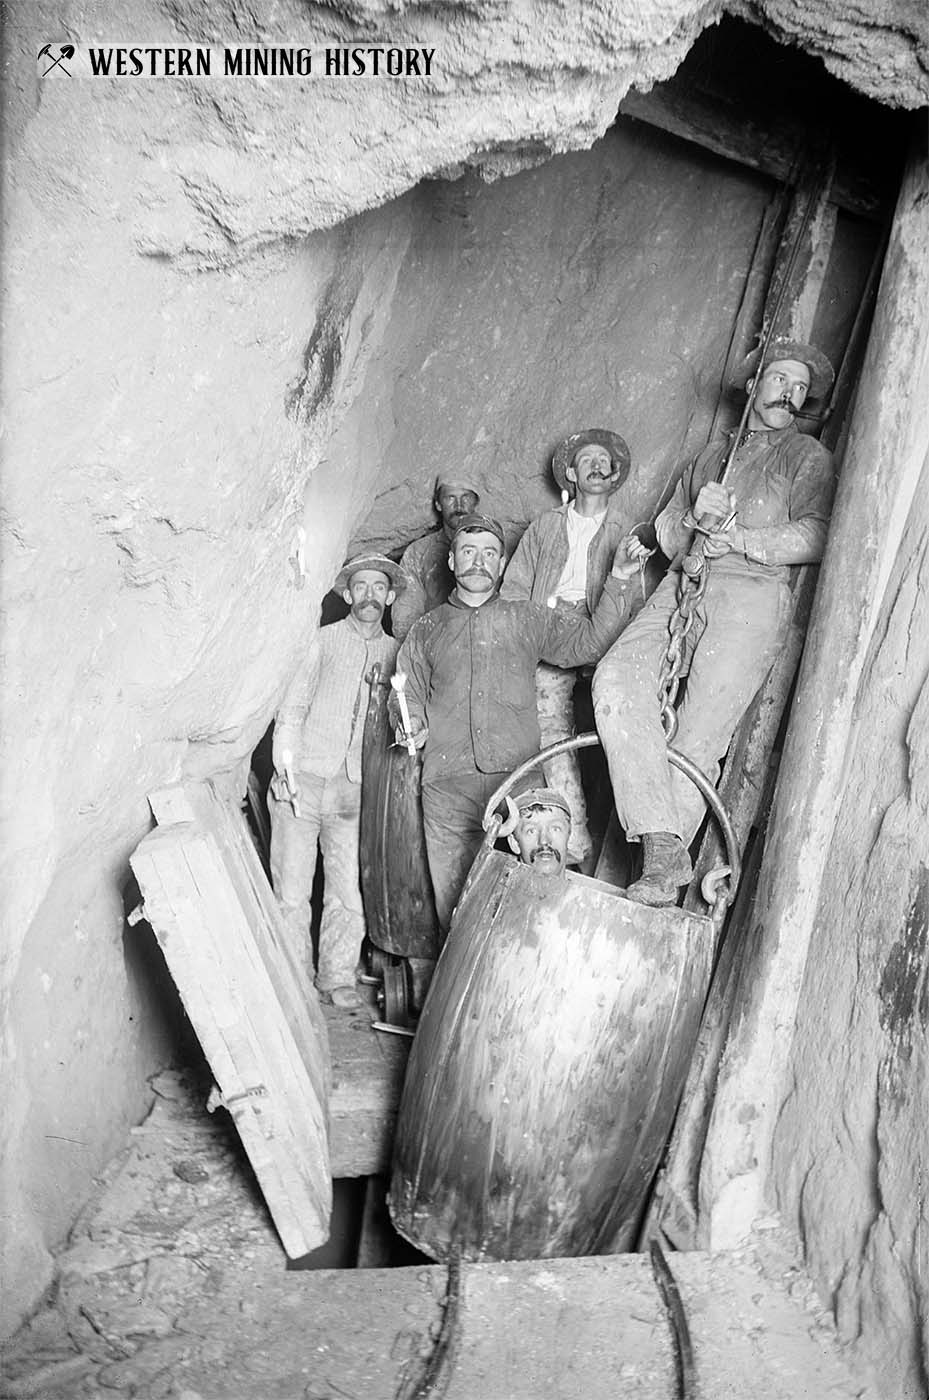 Miners 850 feet deep in the Hubert Mine - Nevadaville, Colorado 1895